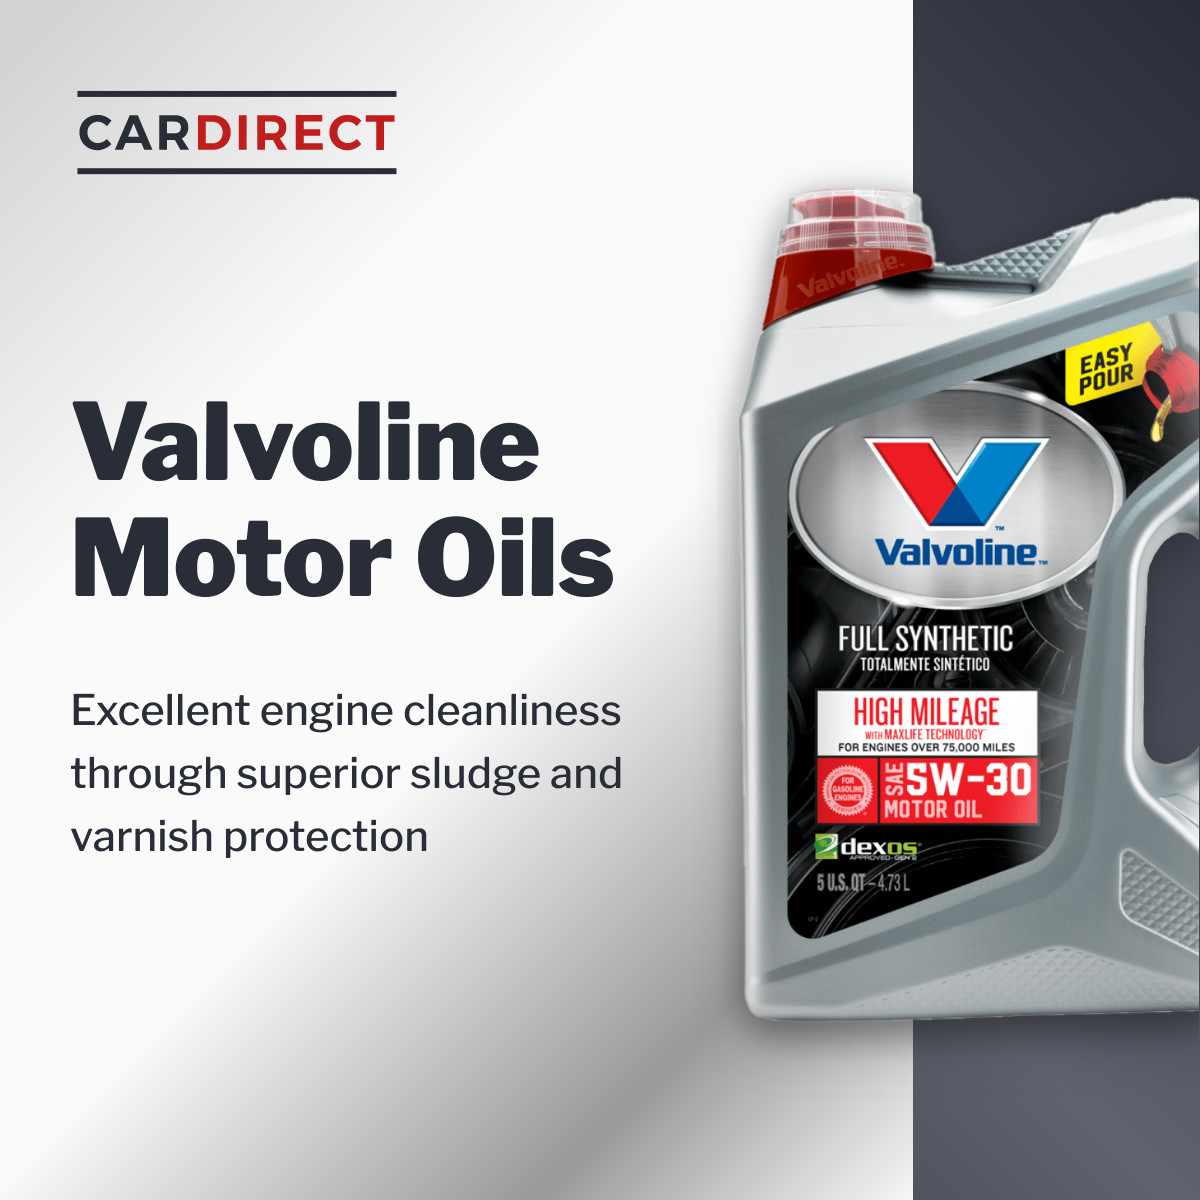 Valvoline Motor Oils Automotive Inline Rectangle 300x250